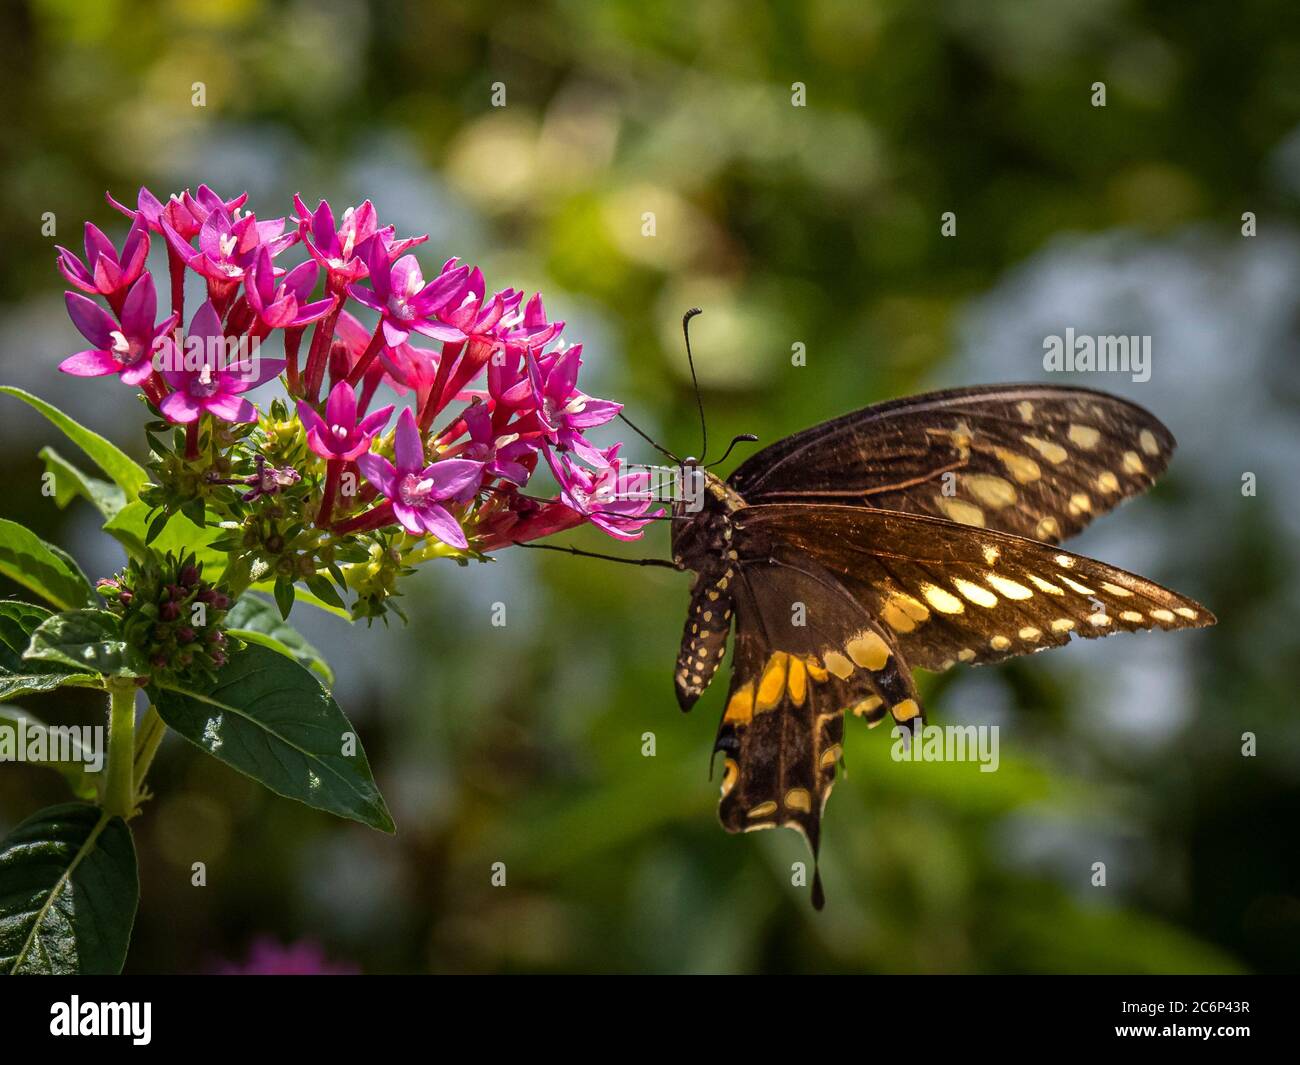 Butterfly on red flower in garden, Stock Photo